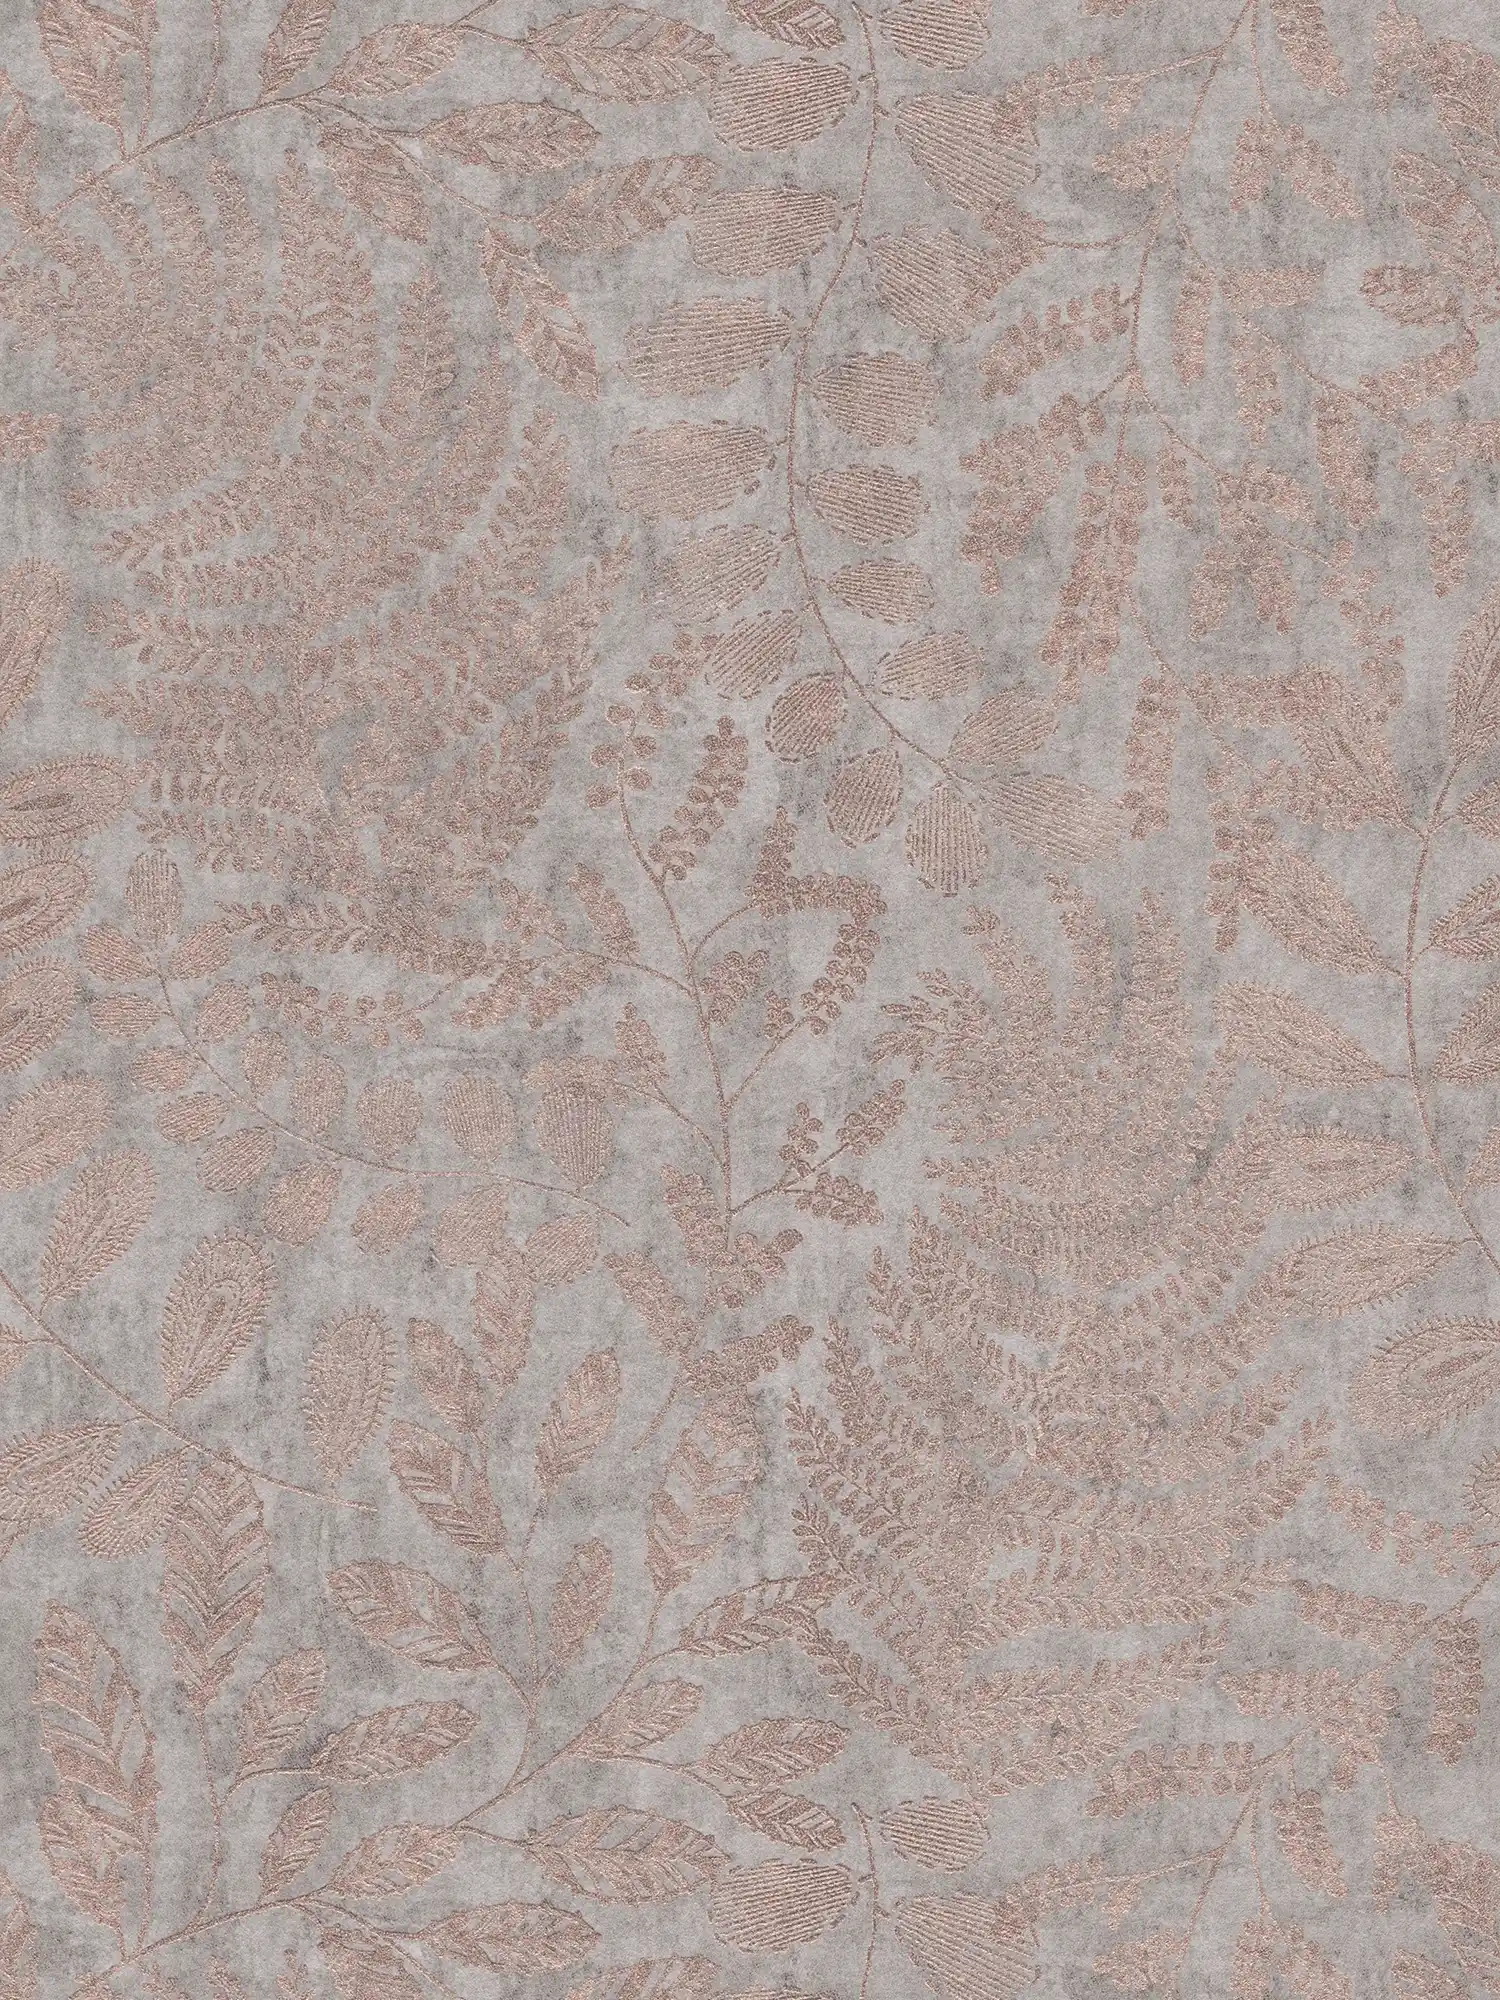 Metallic wallpaper leaf pattern in skandi style - grey, metallic
